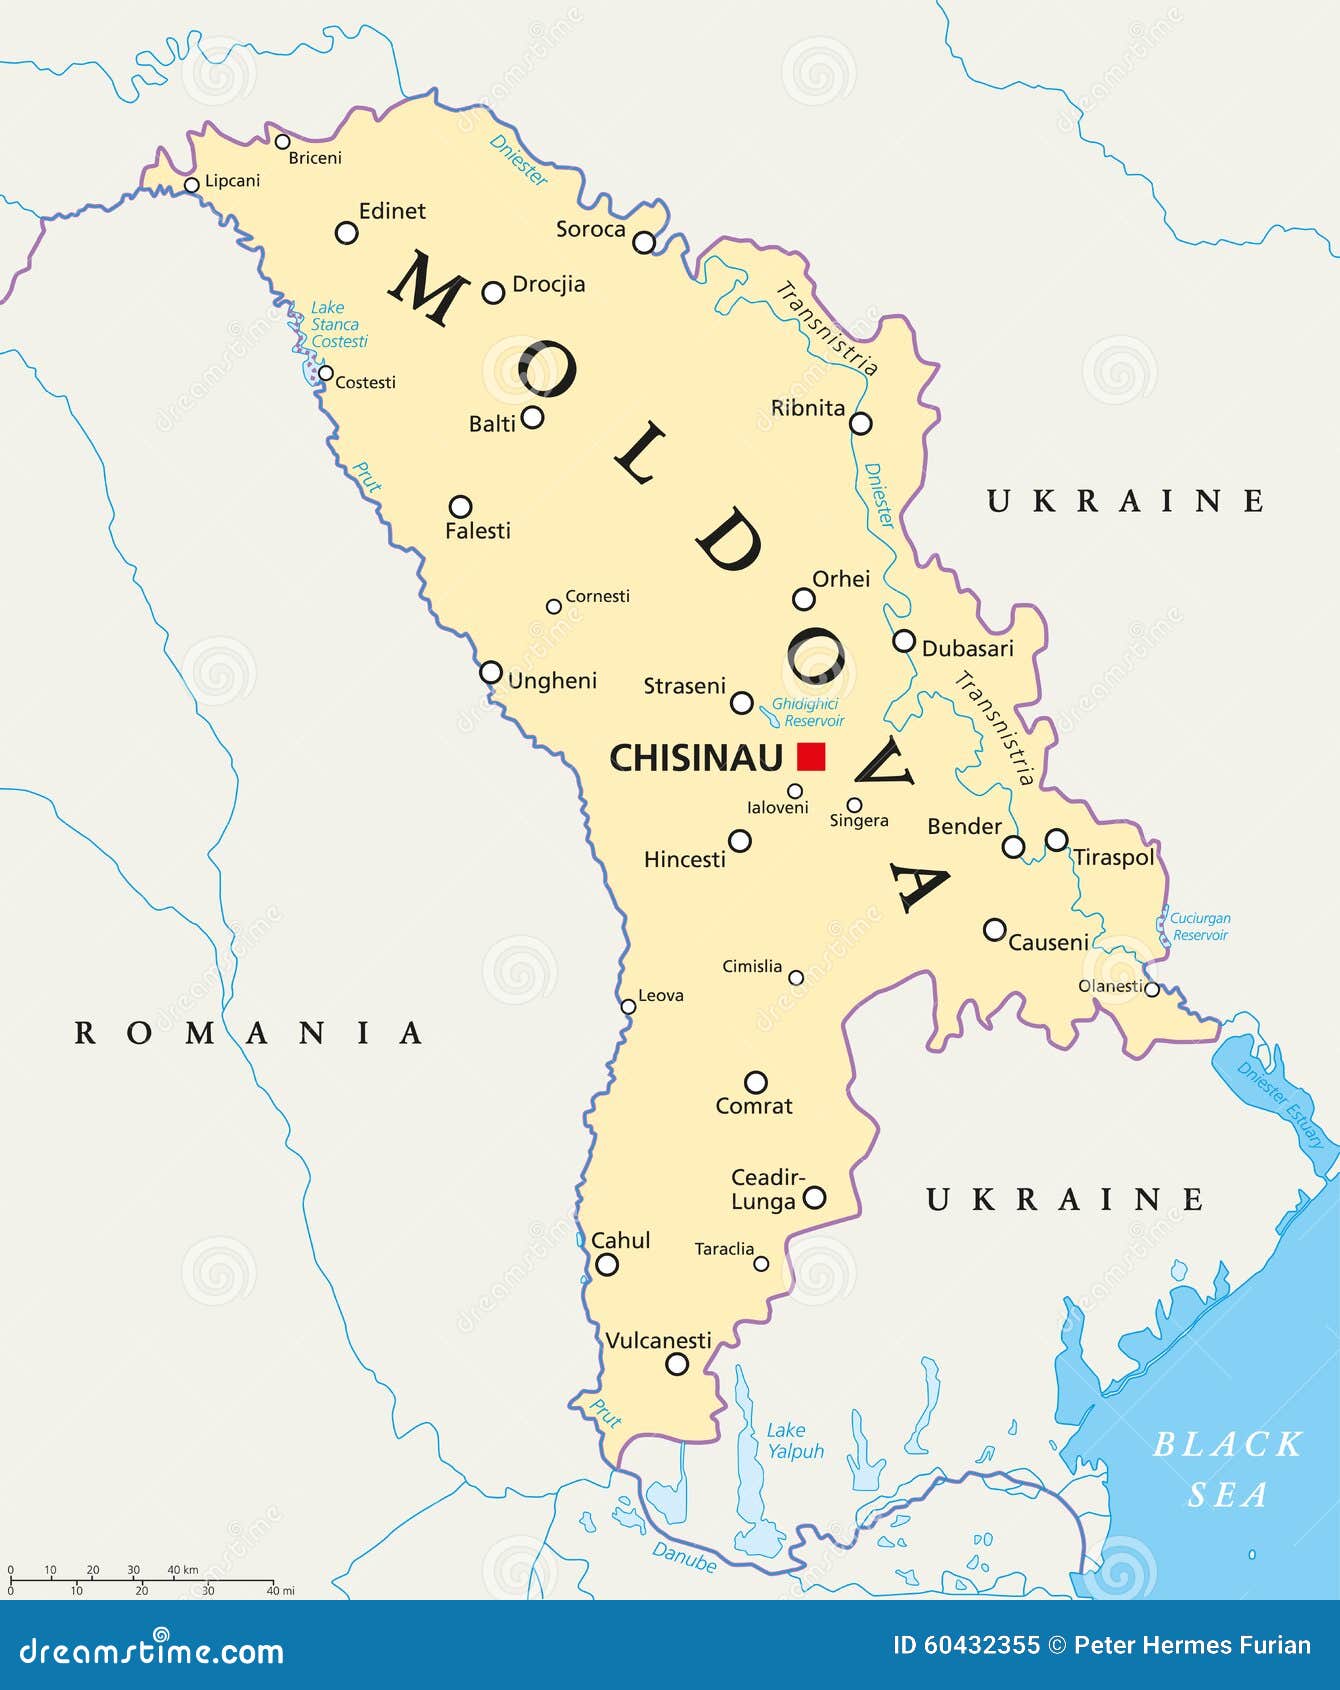 moldova political map